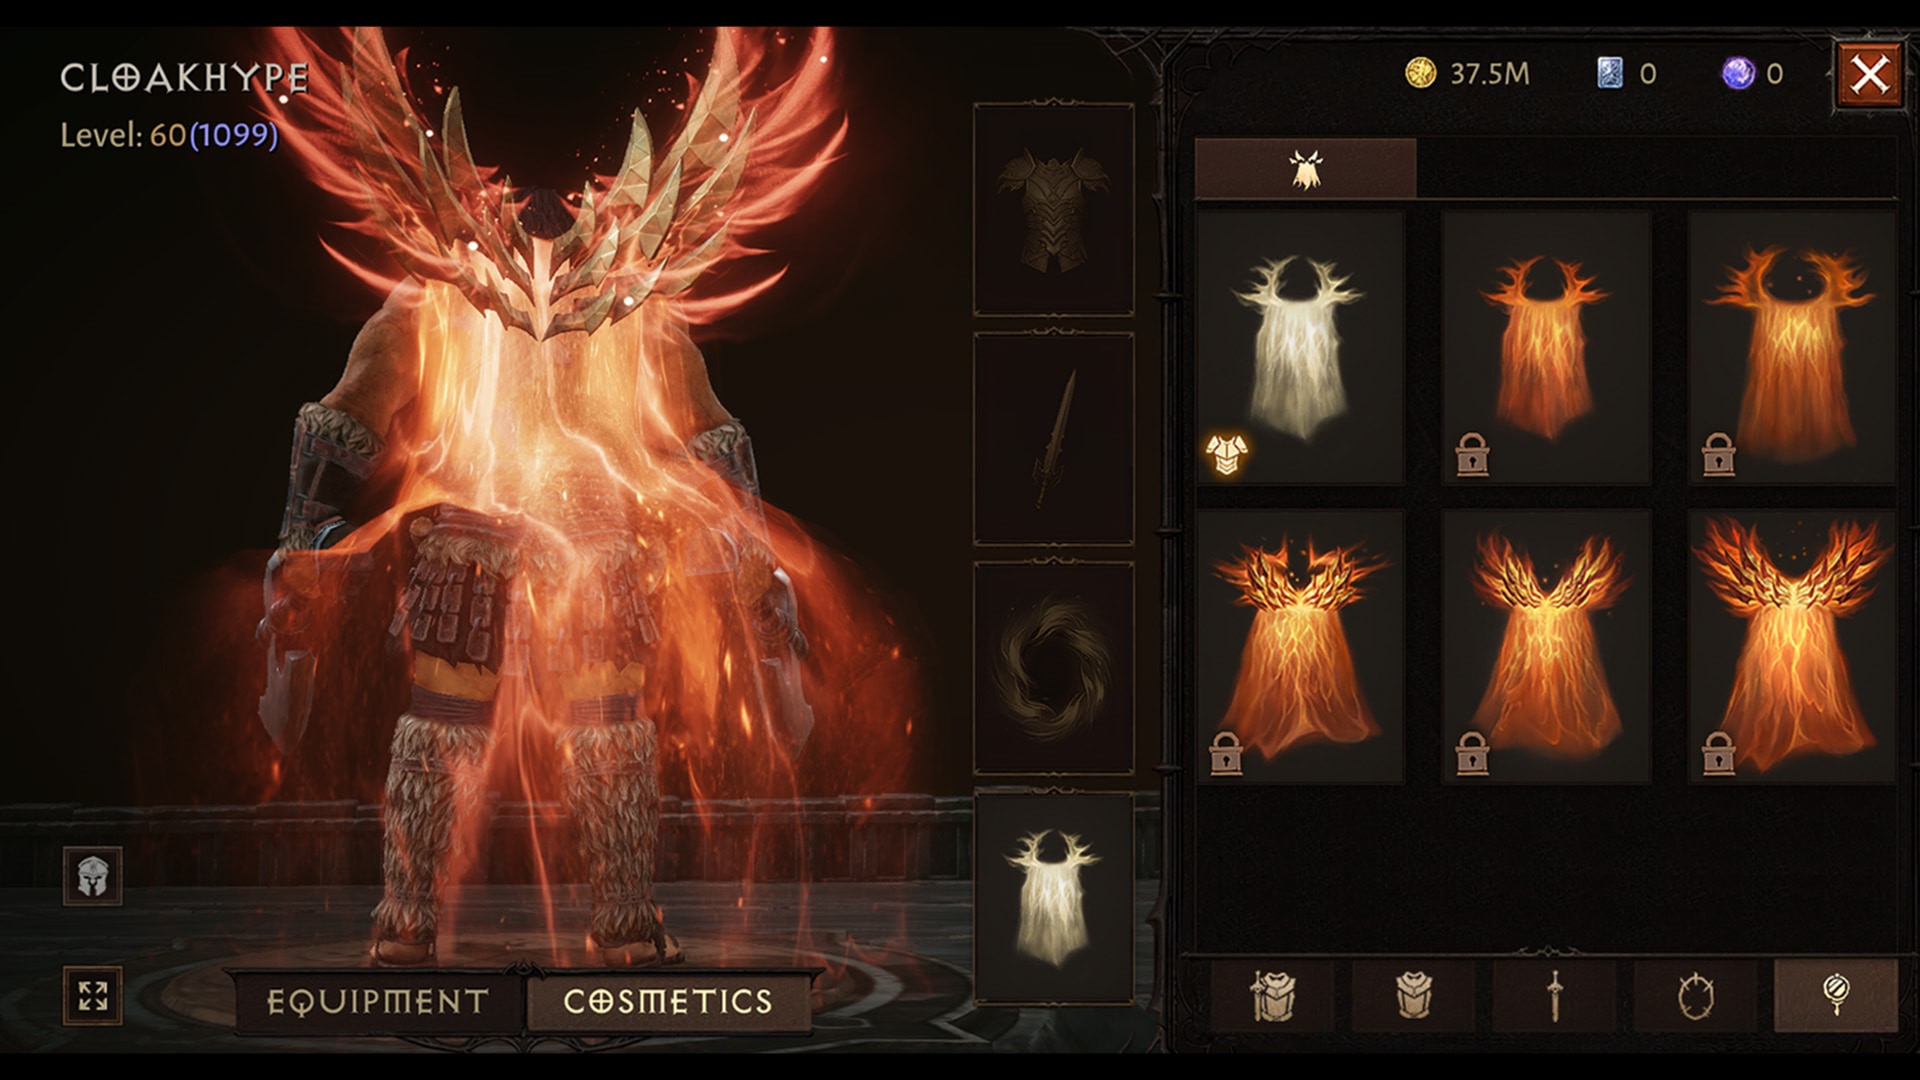 Diablo Immortal – Explore the Tristram Cathedral Dungeon in Dark Rebirth  Version Update